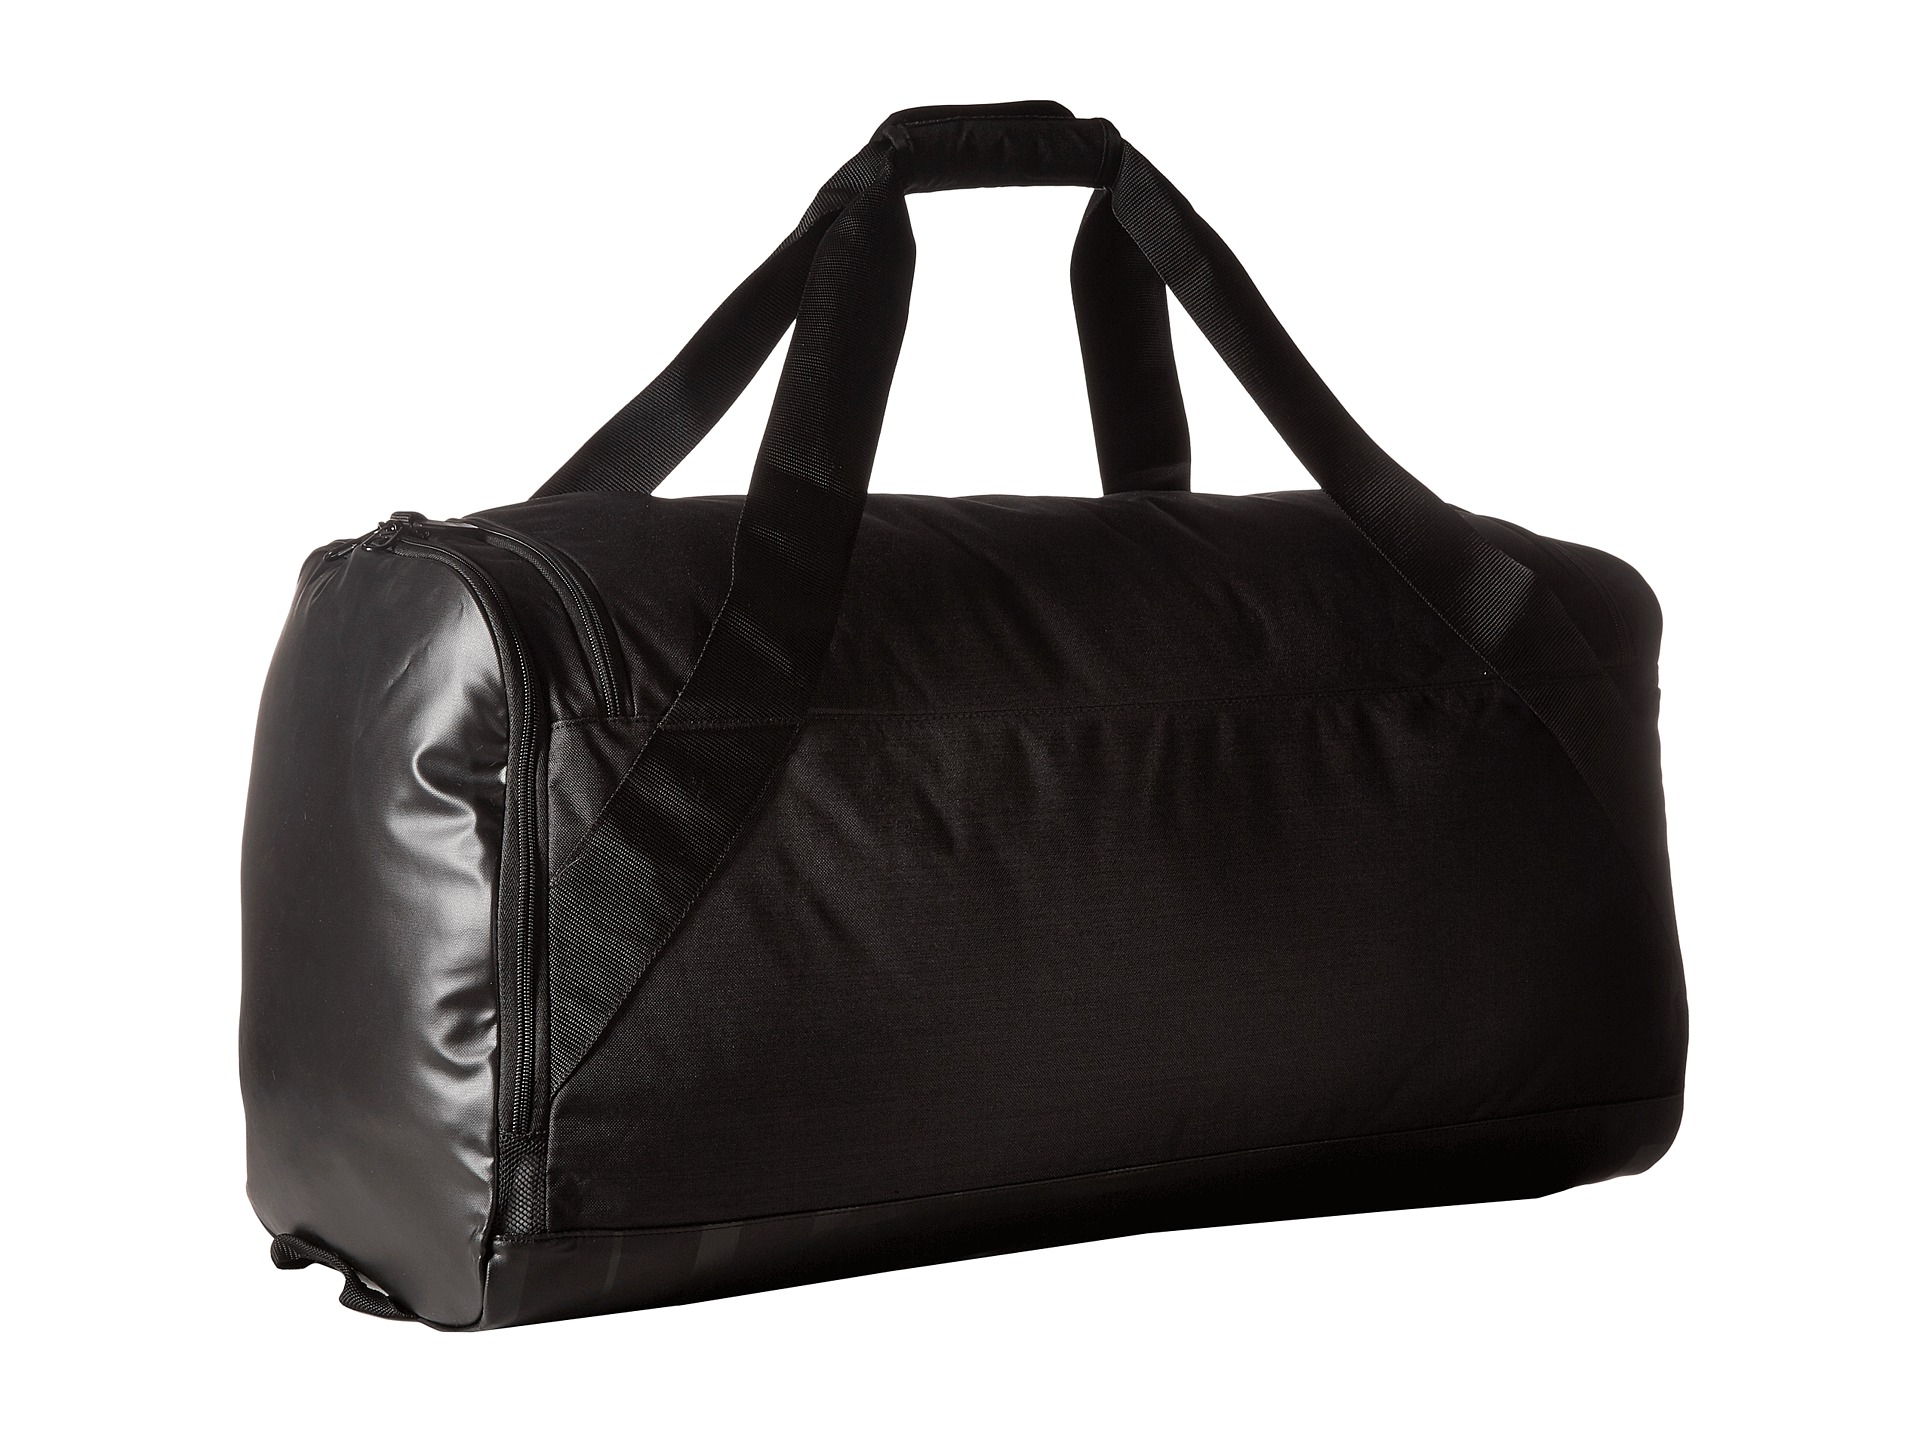 Nike Brasilia Extra Large Duffel Bag - 0 Free Shipping BOTH Ways